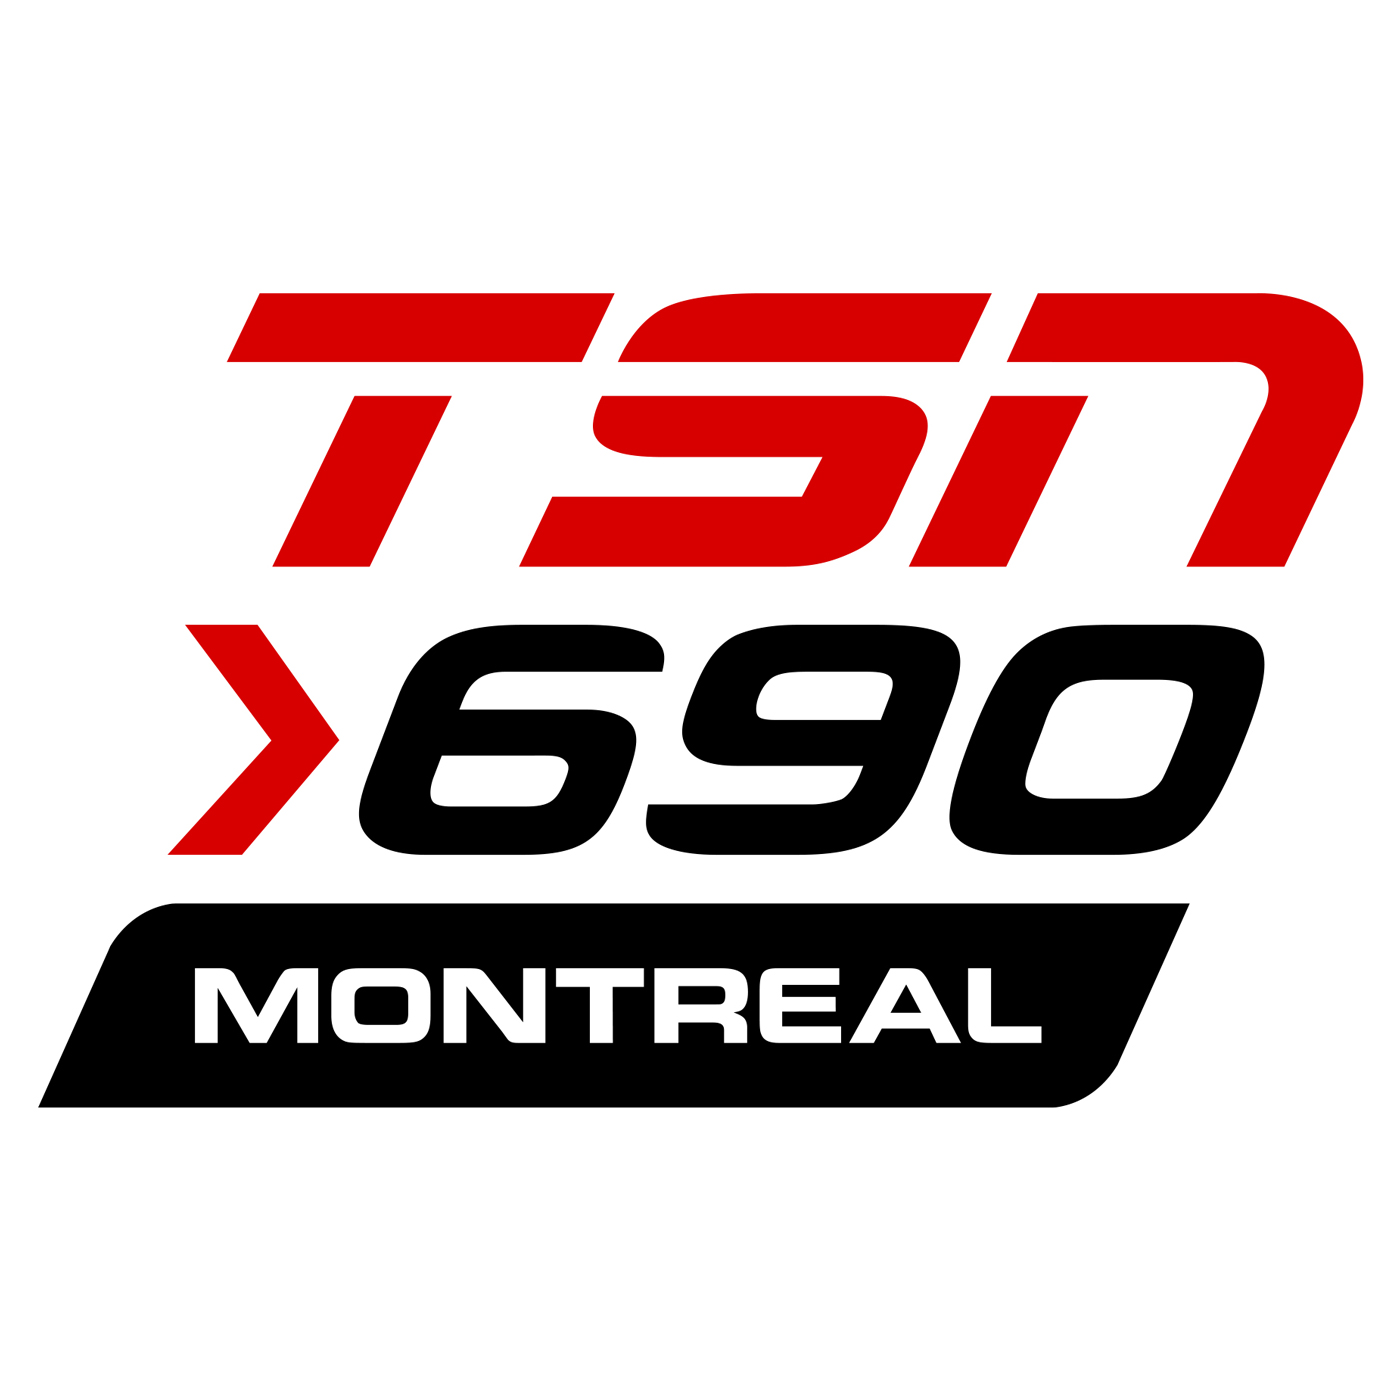 TSN 690 Montreal | News & Audio for all Montreal Sports